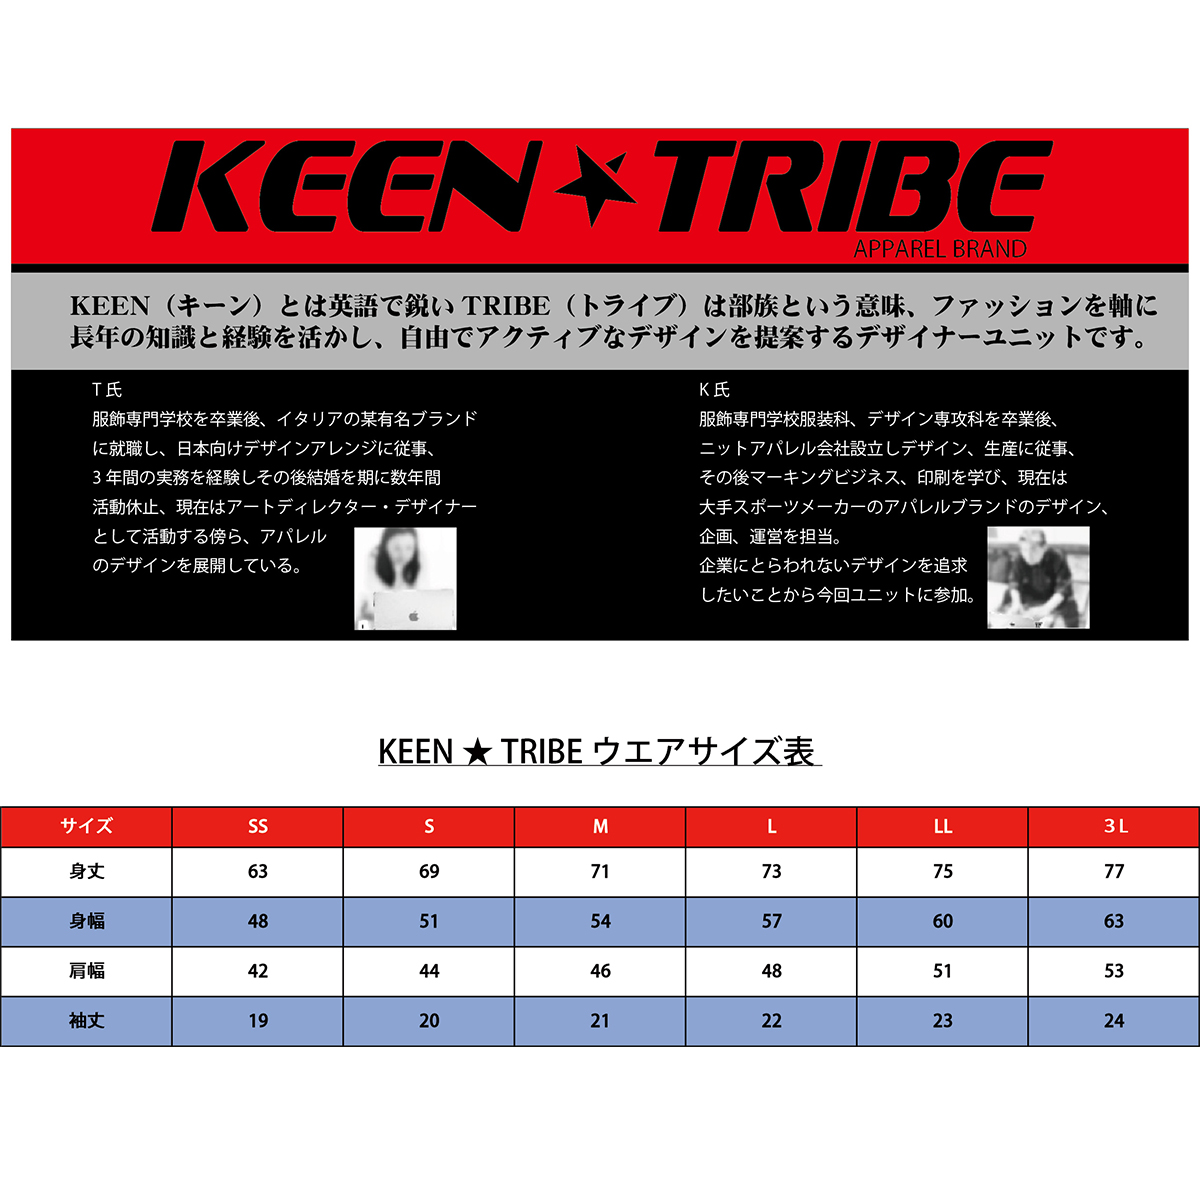 KEEN ★ TRIBE　KT-57(受注生産)【特別価格】